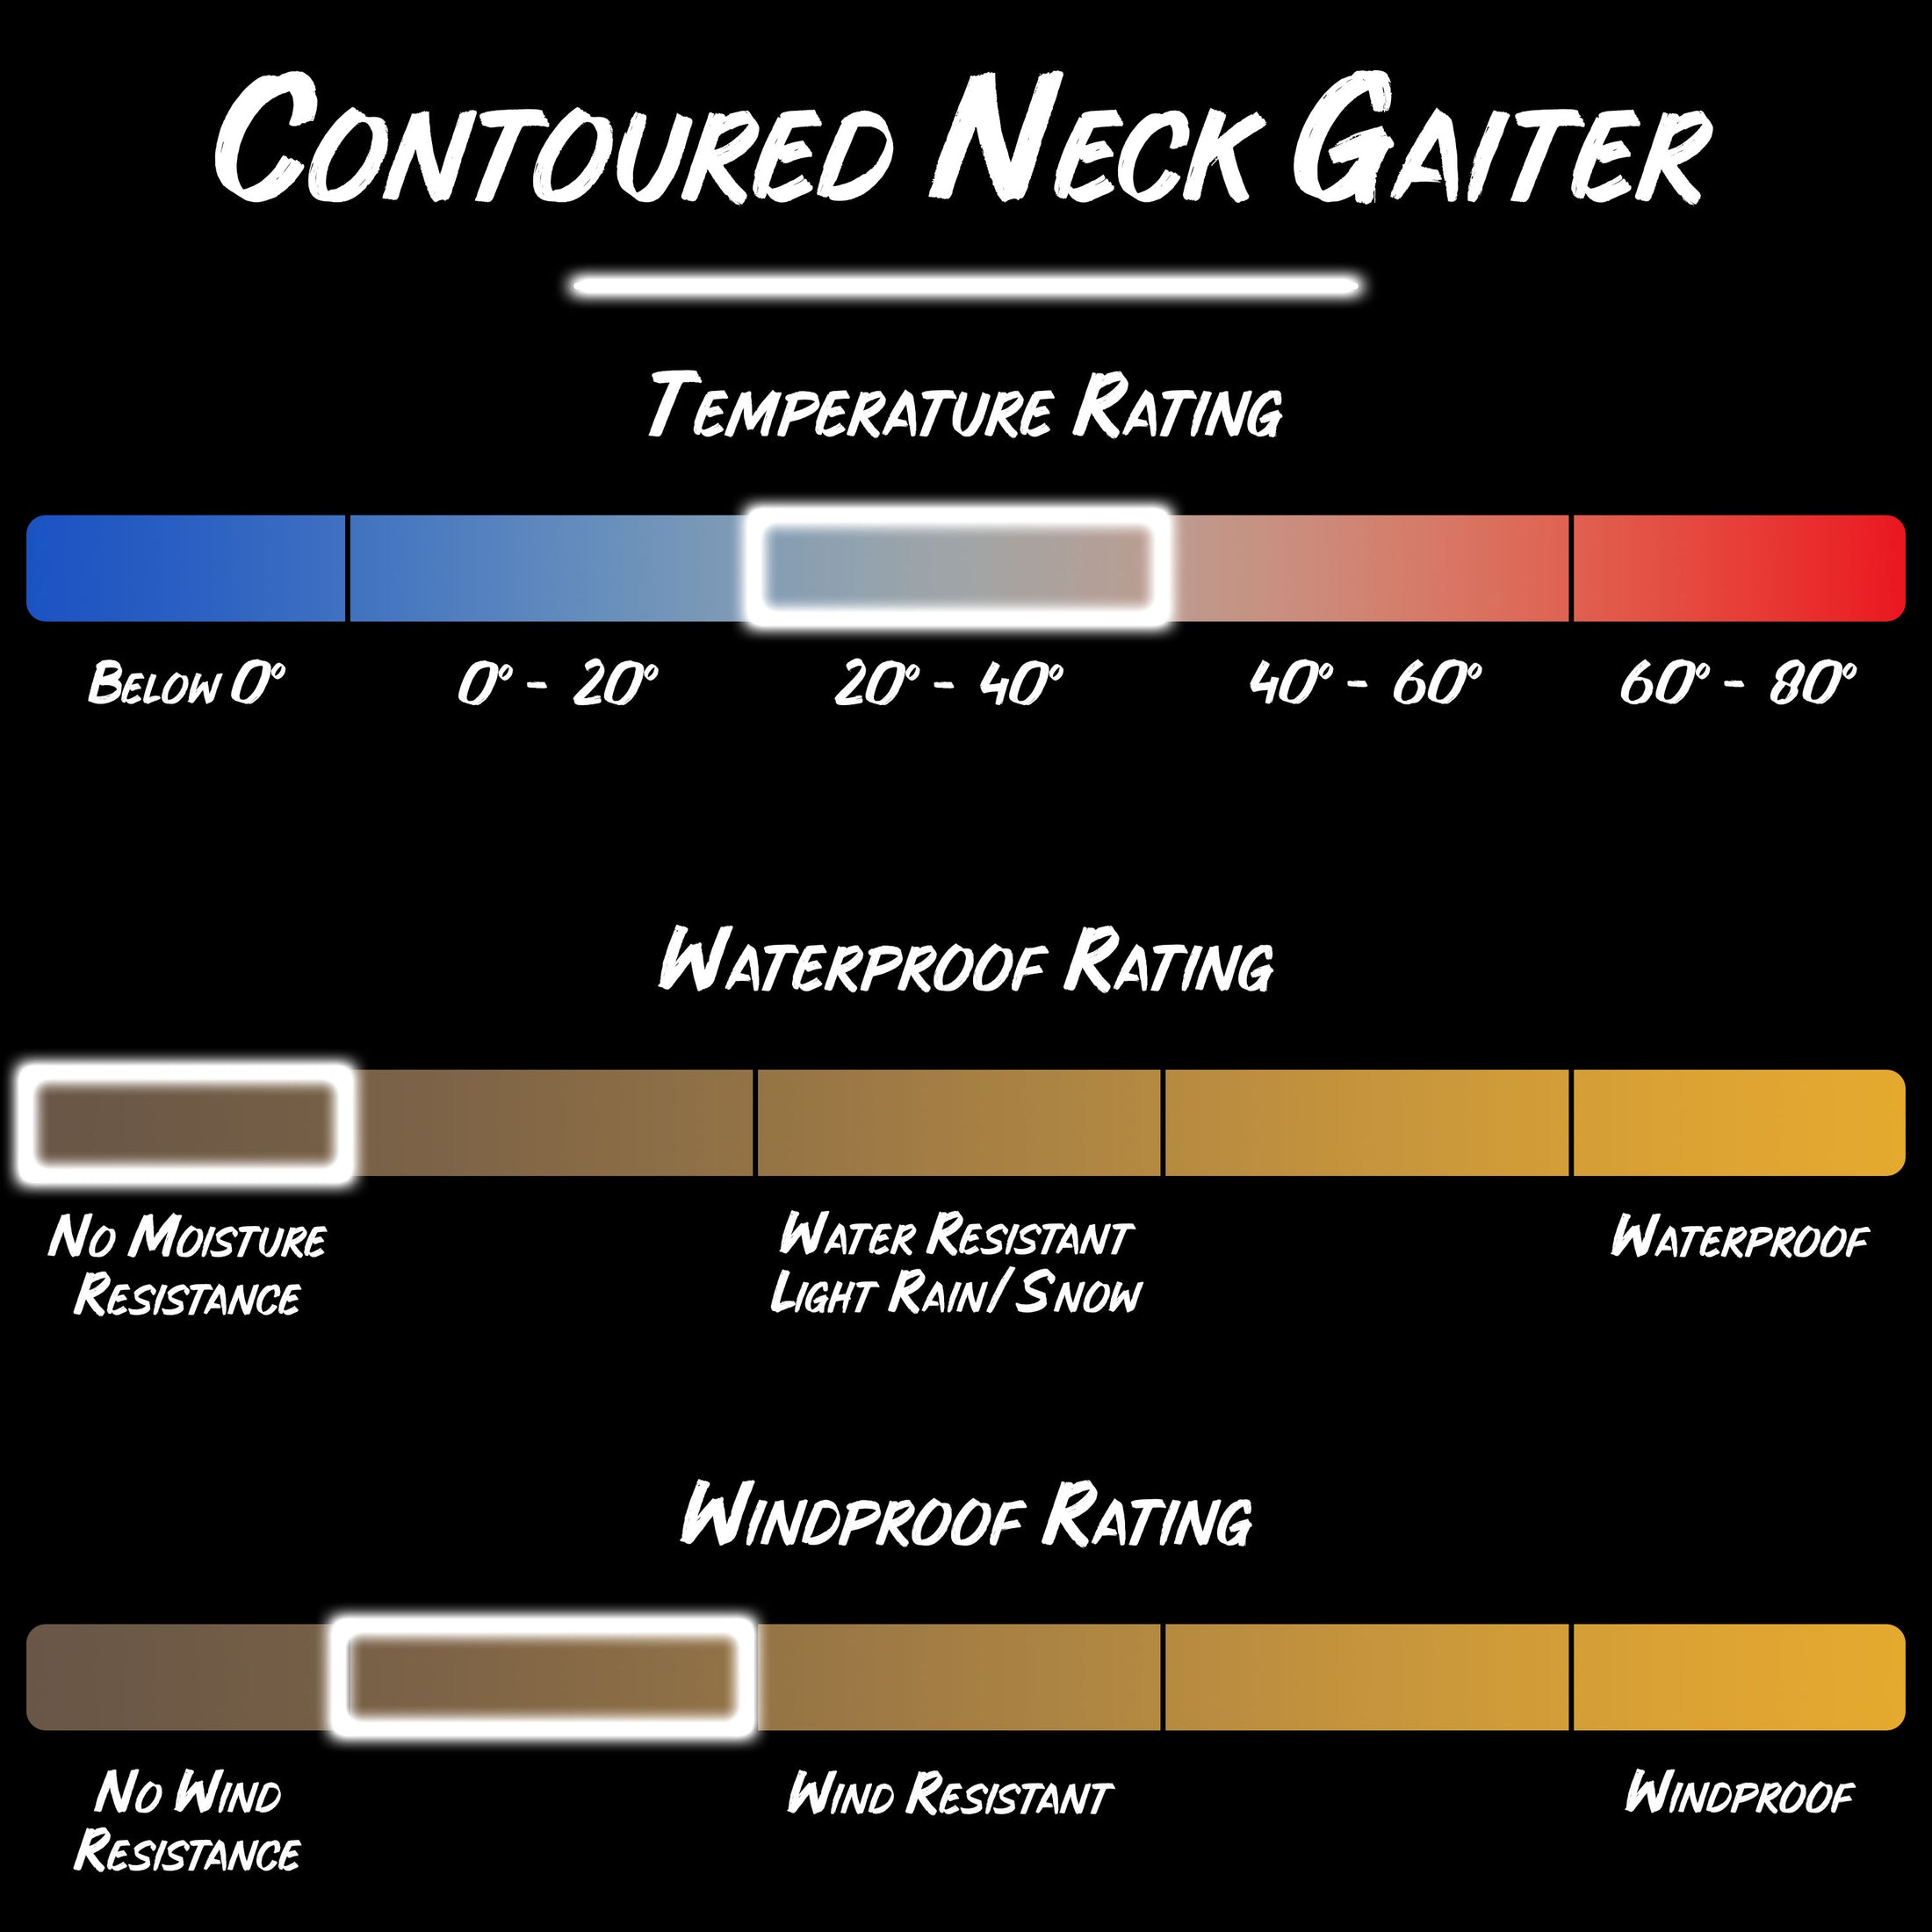 Gamehide contoured neck gaiter product specifications